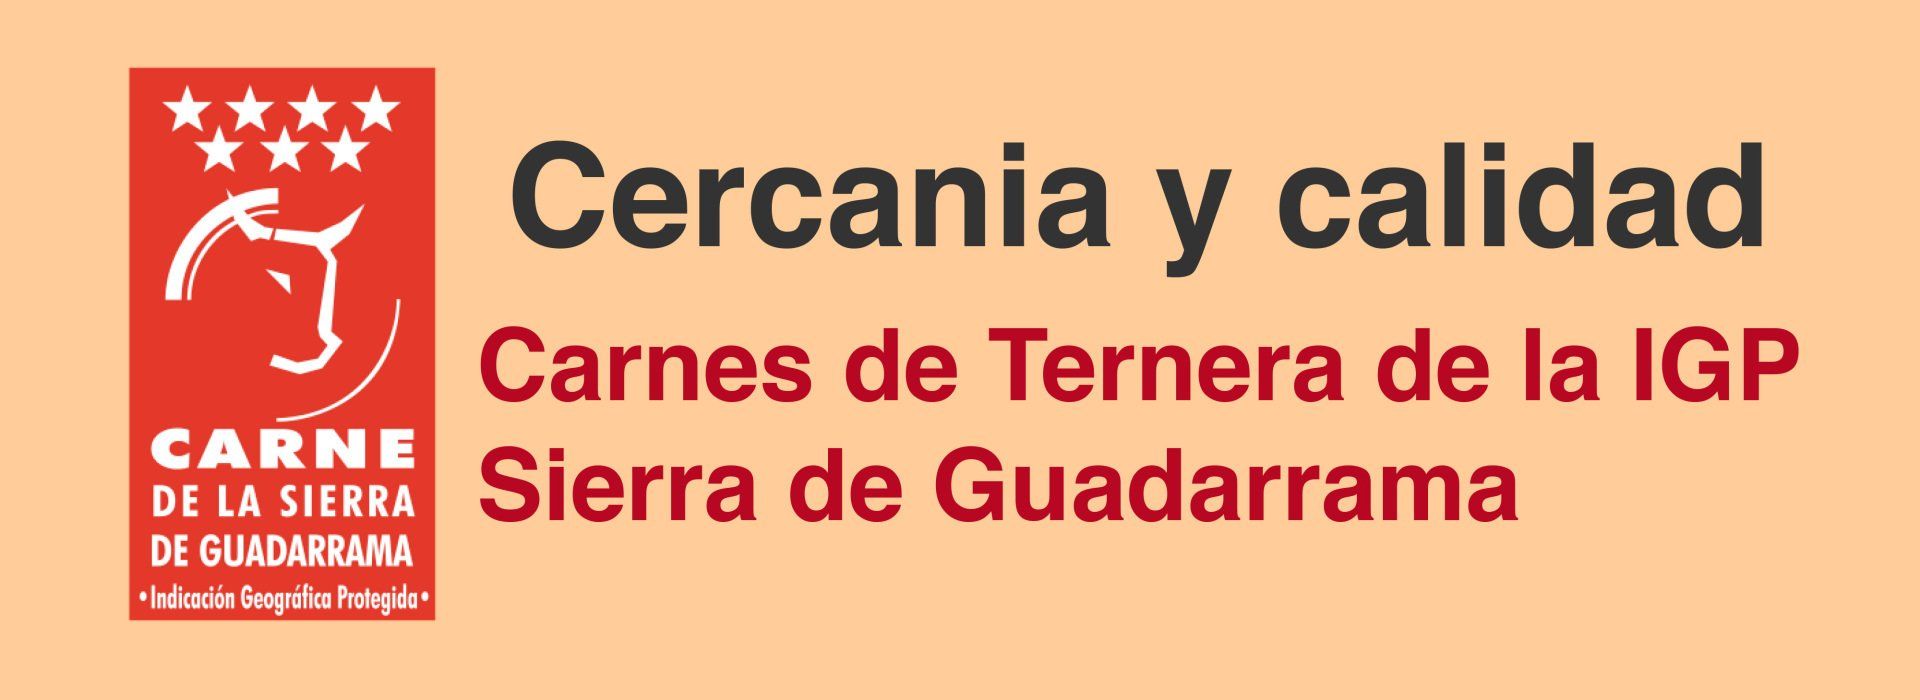 Ternera Sierra Guadarrama